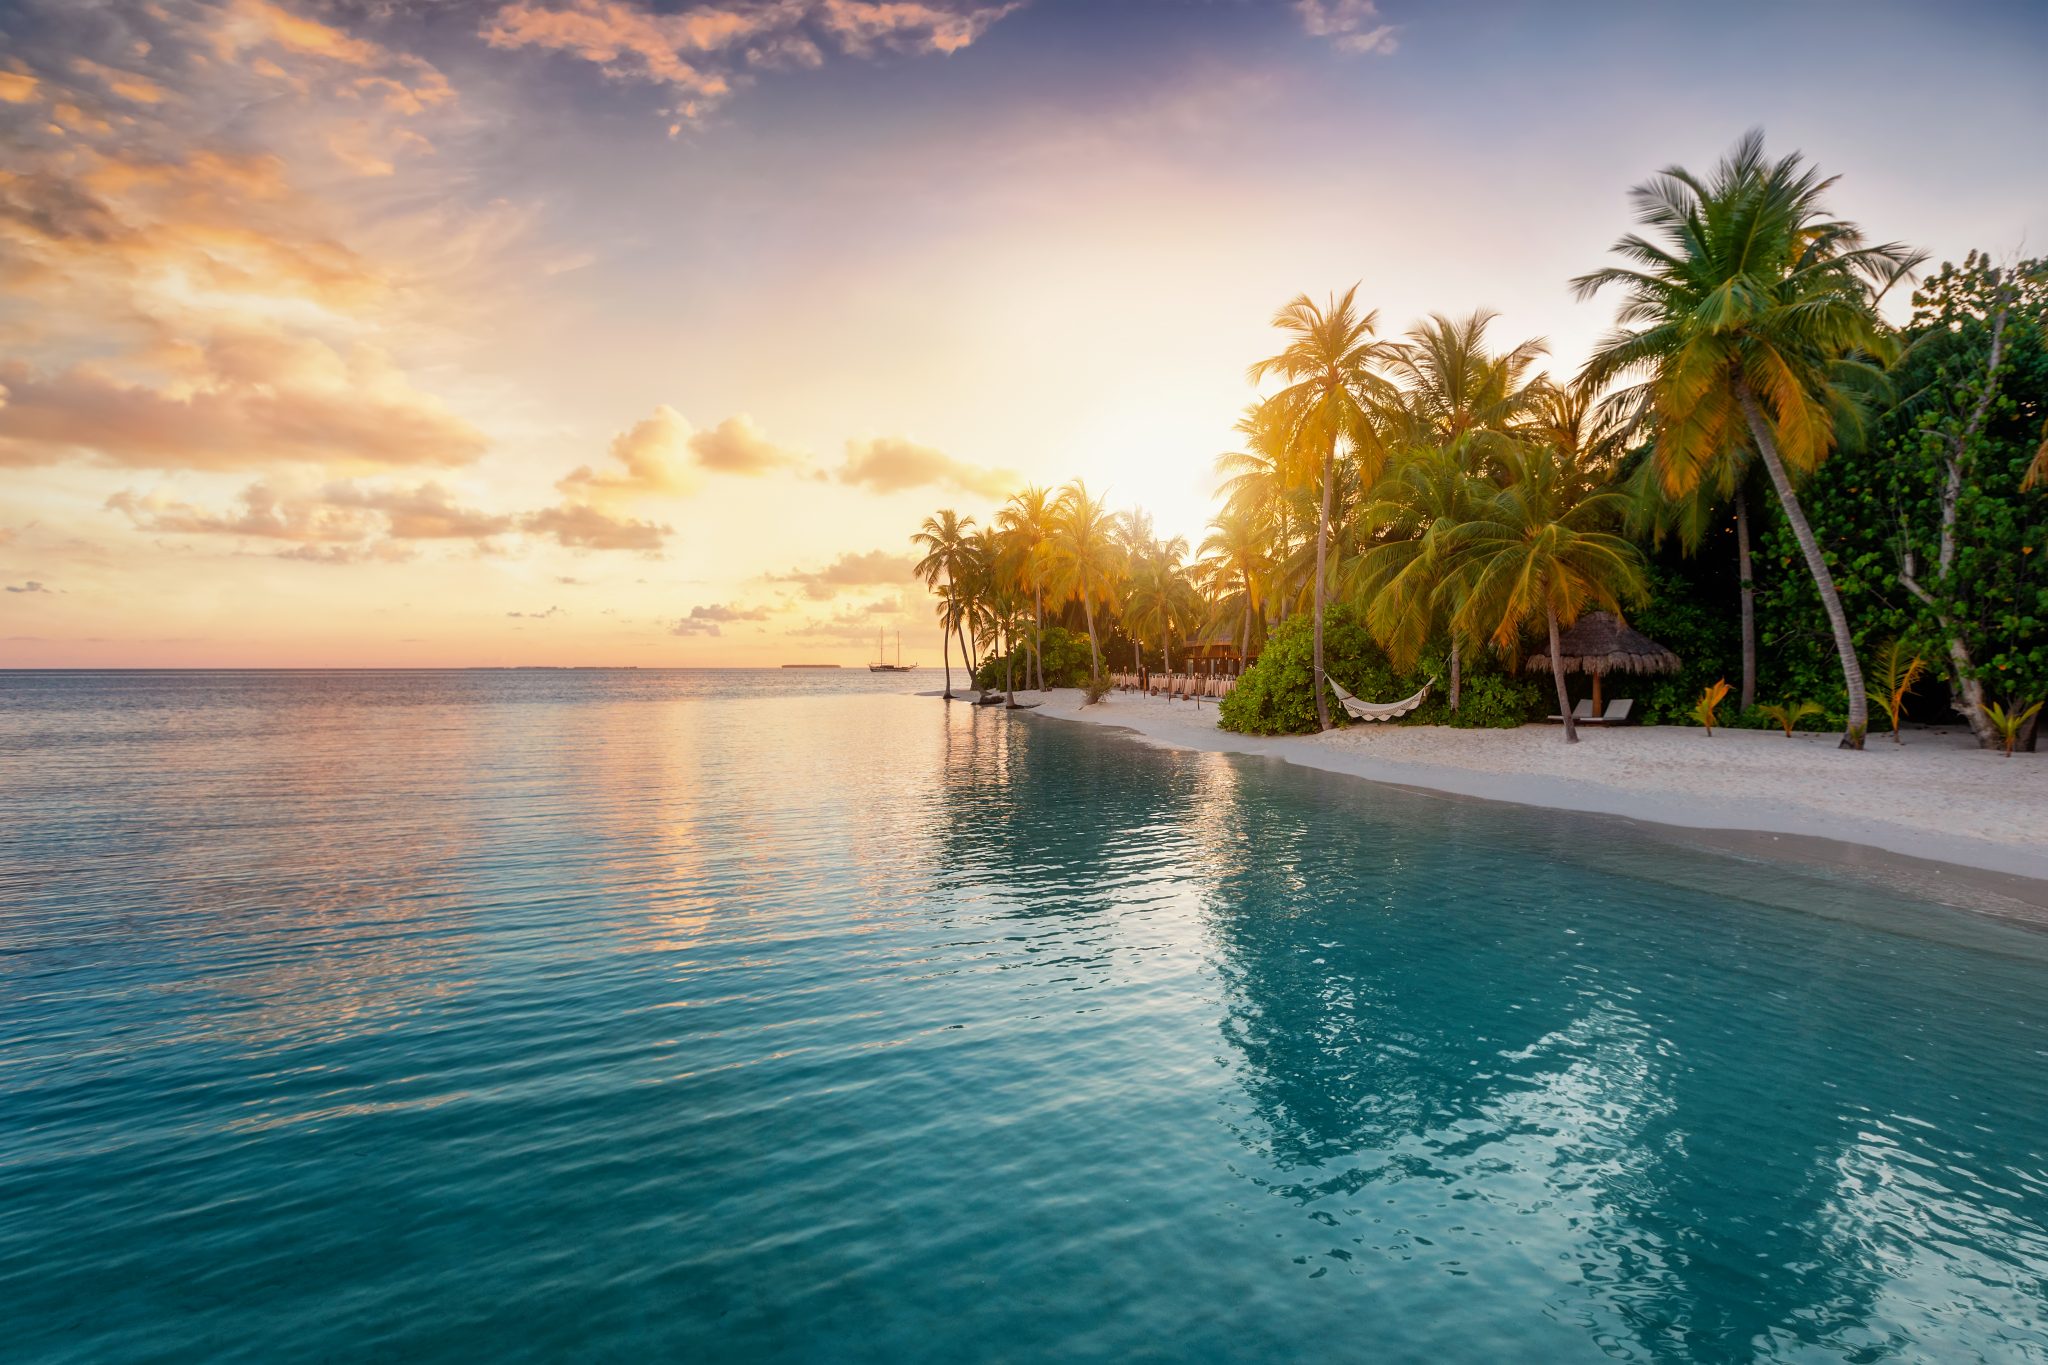 Sunrise behind a tropical island in the Maldives - RIU.com | Blog